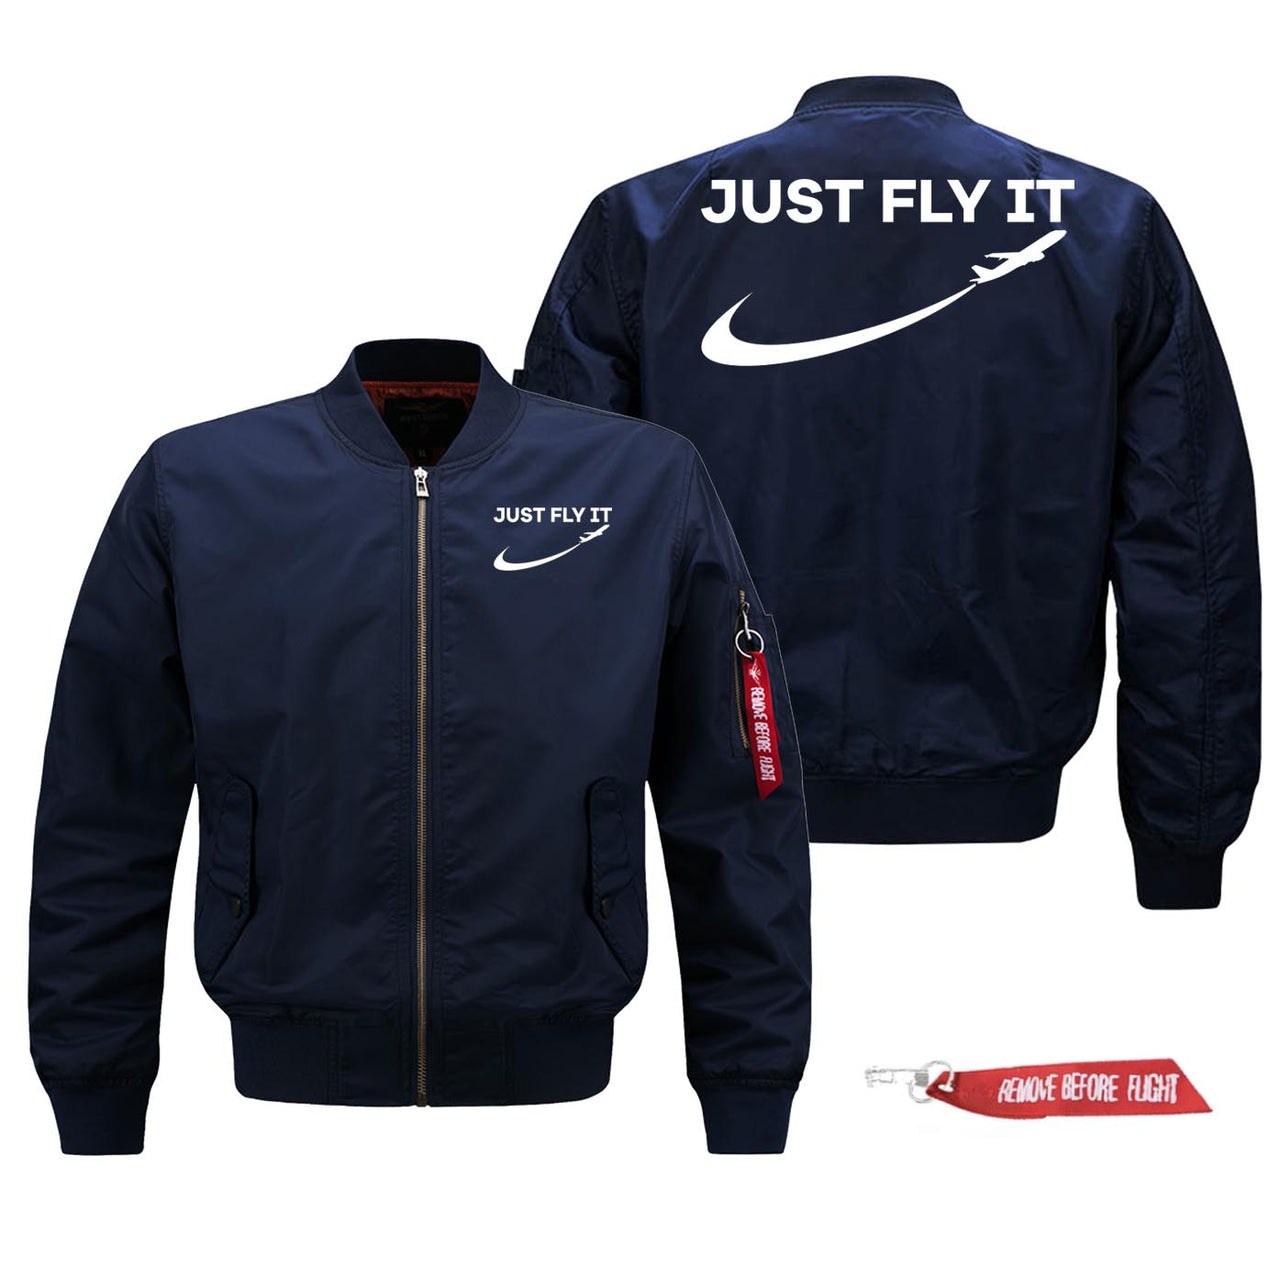 Just Fly It 2 Designed Pilot Jackets (Customizable)